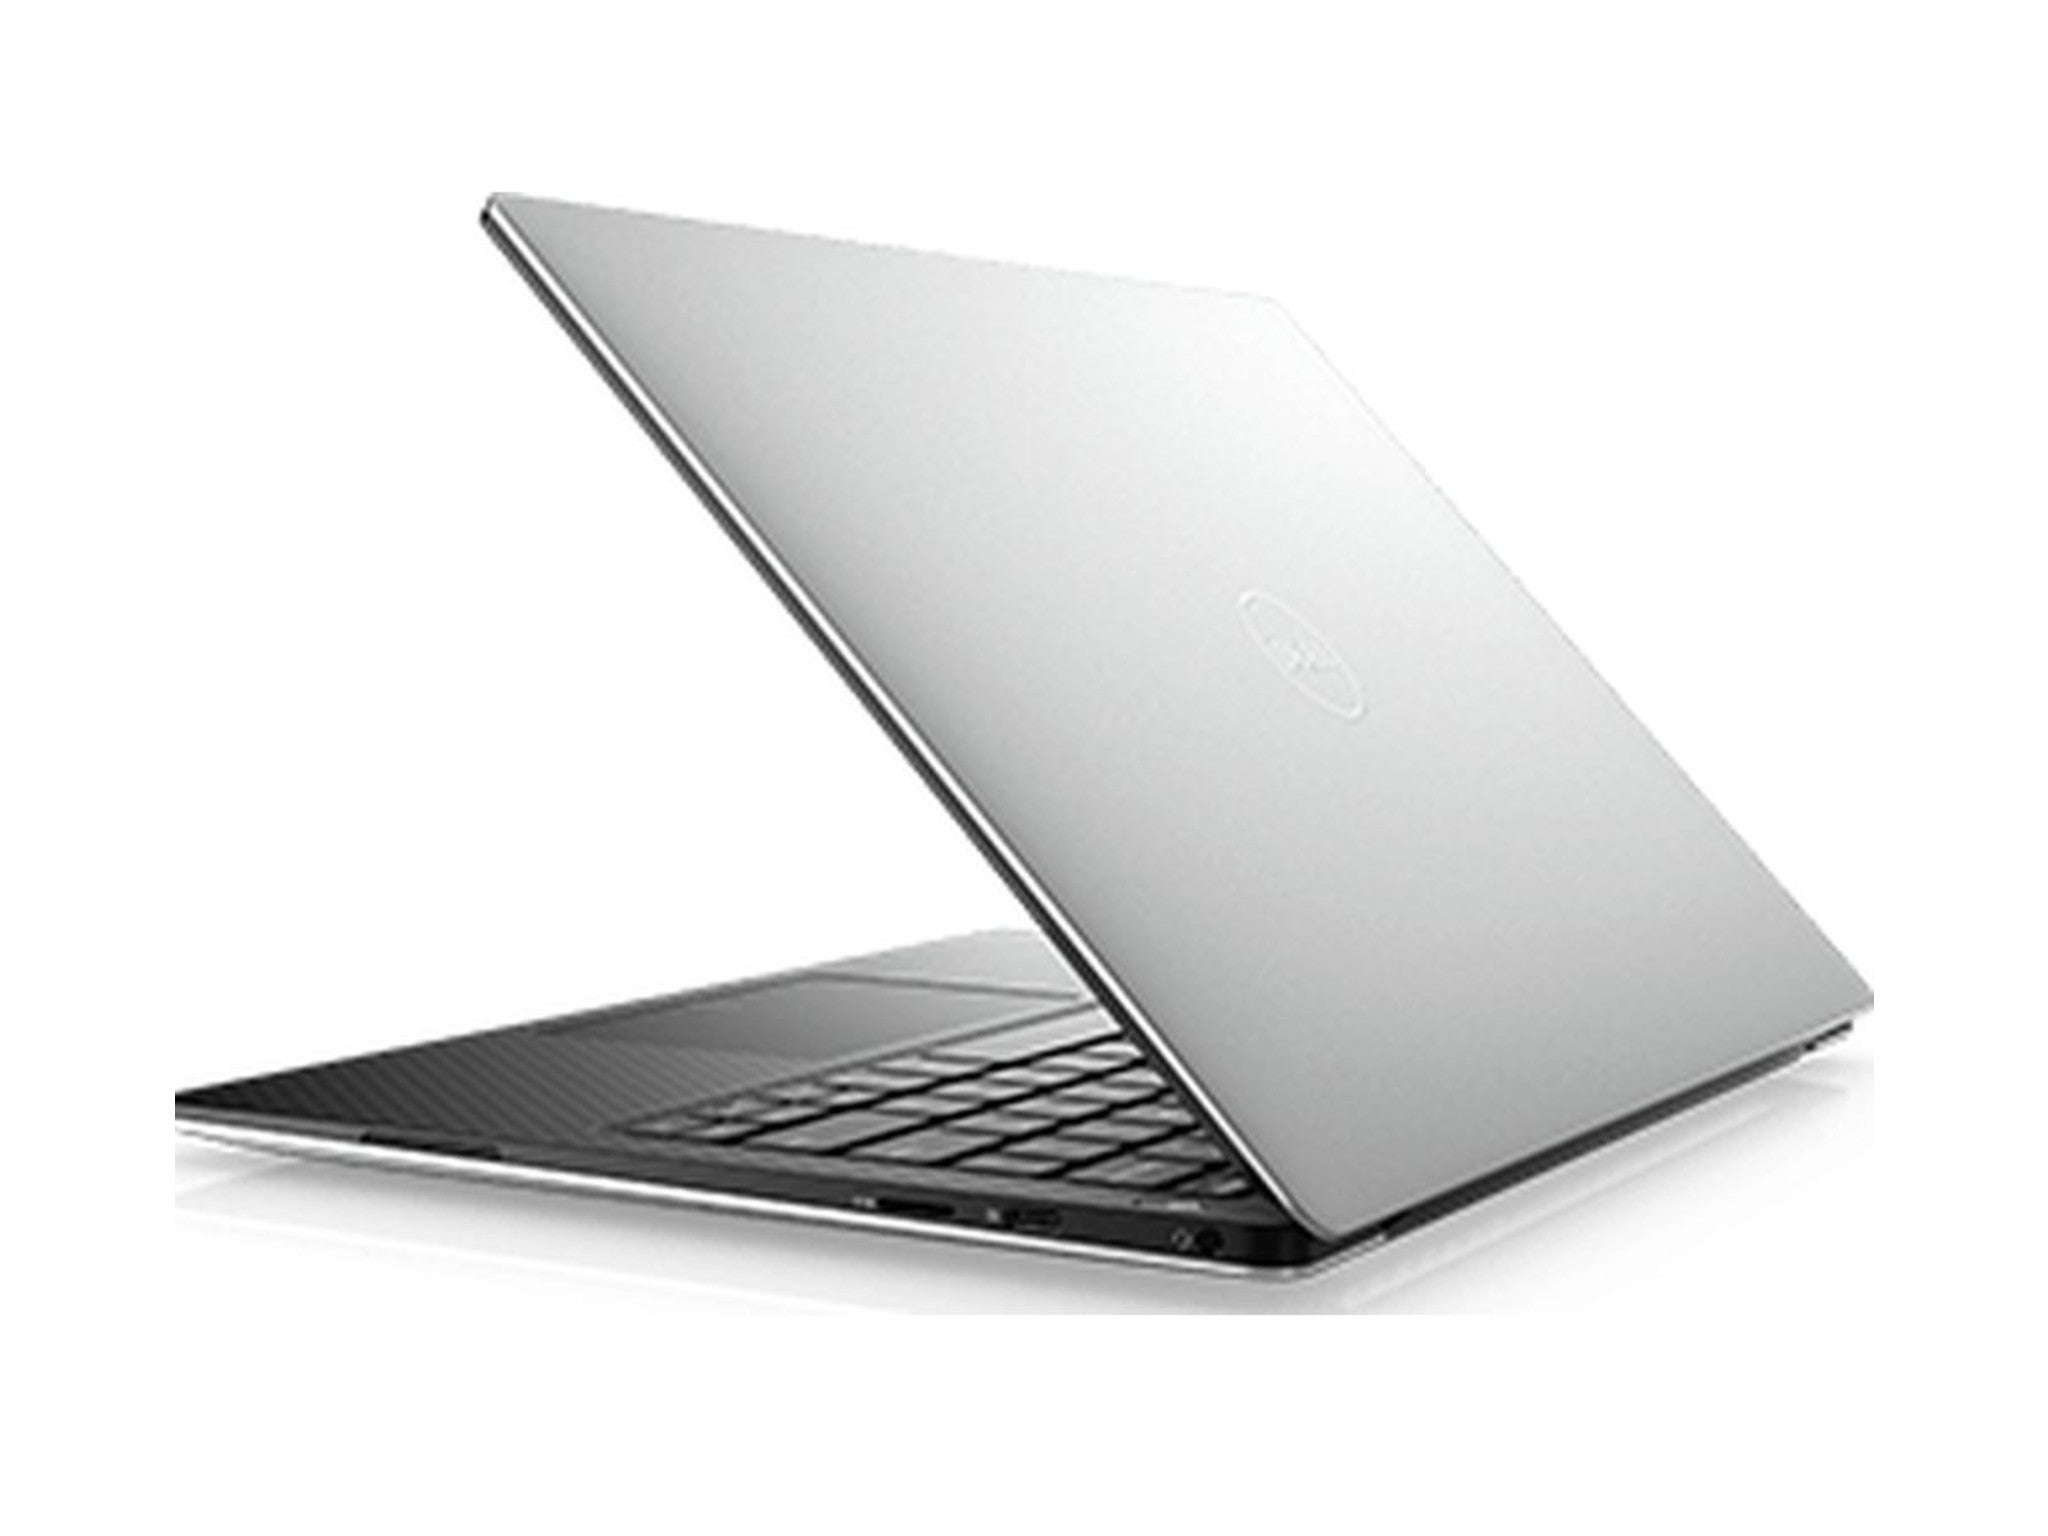 Dell XPS 13 7390 13.3_ laptop indybest.jpg